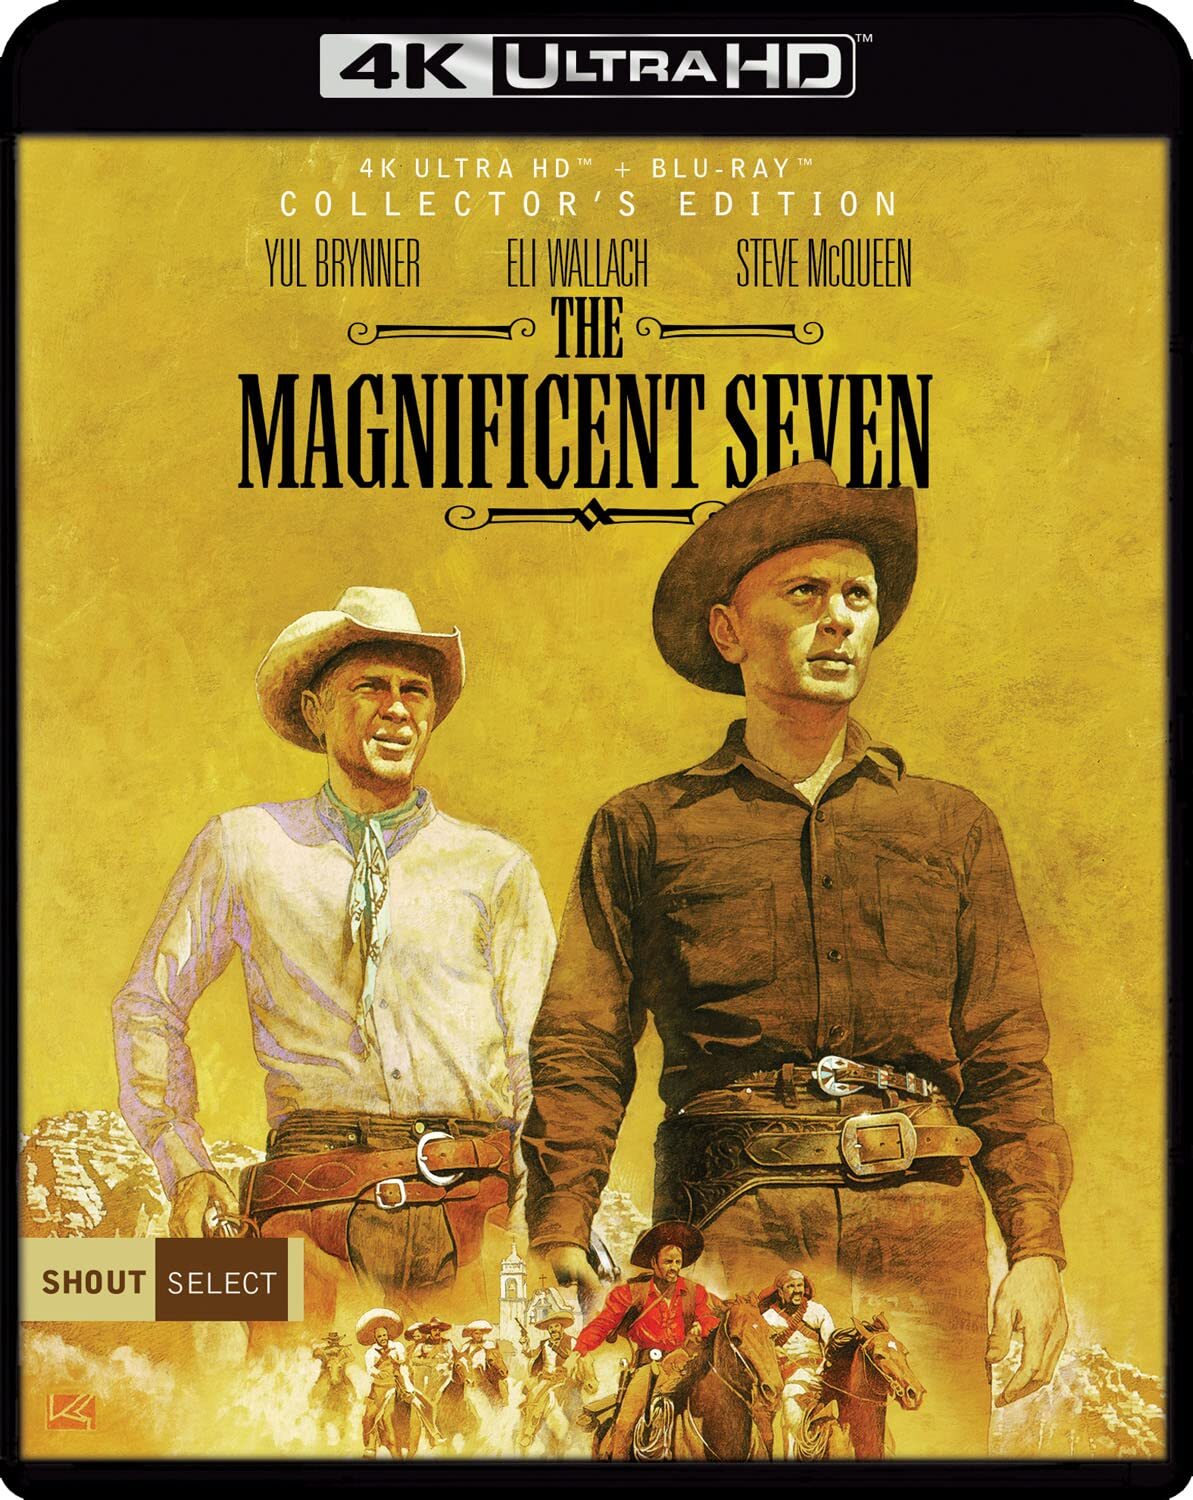 MAGNIFICENT SEVEN, THE (1960)